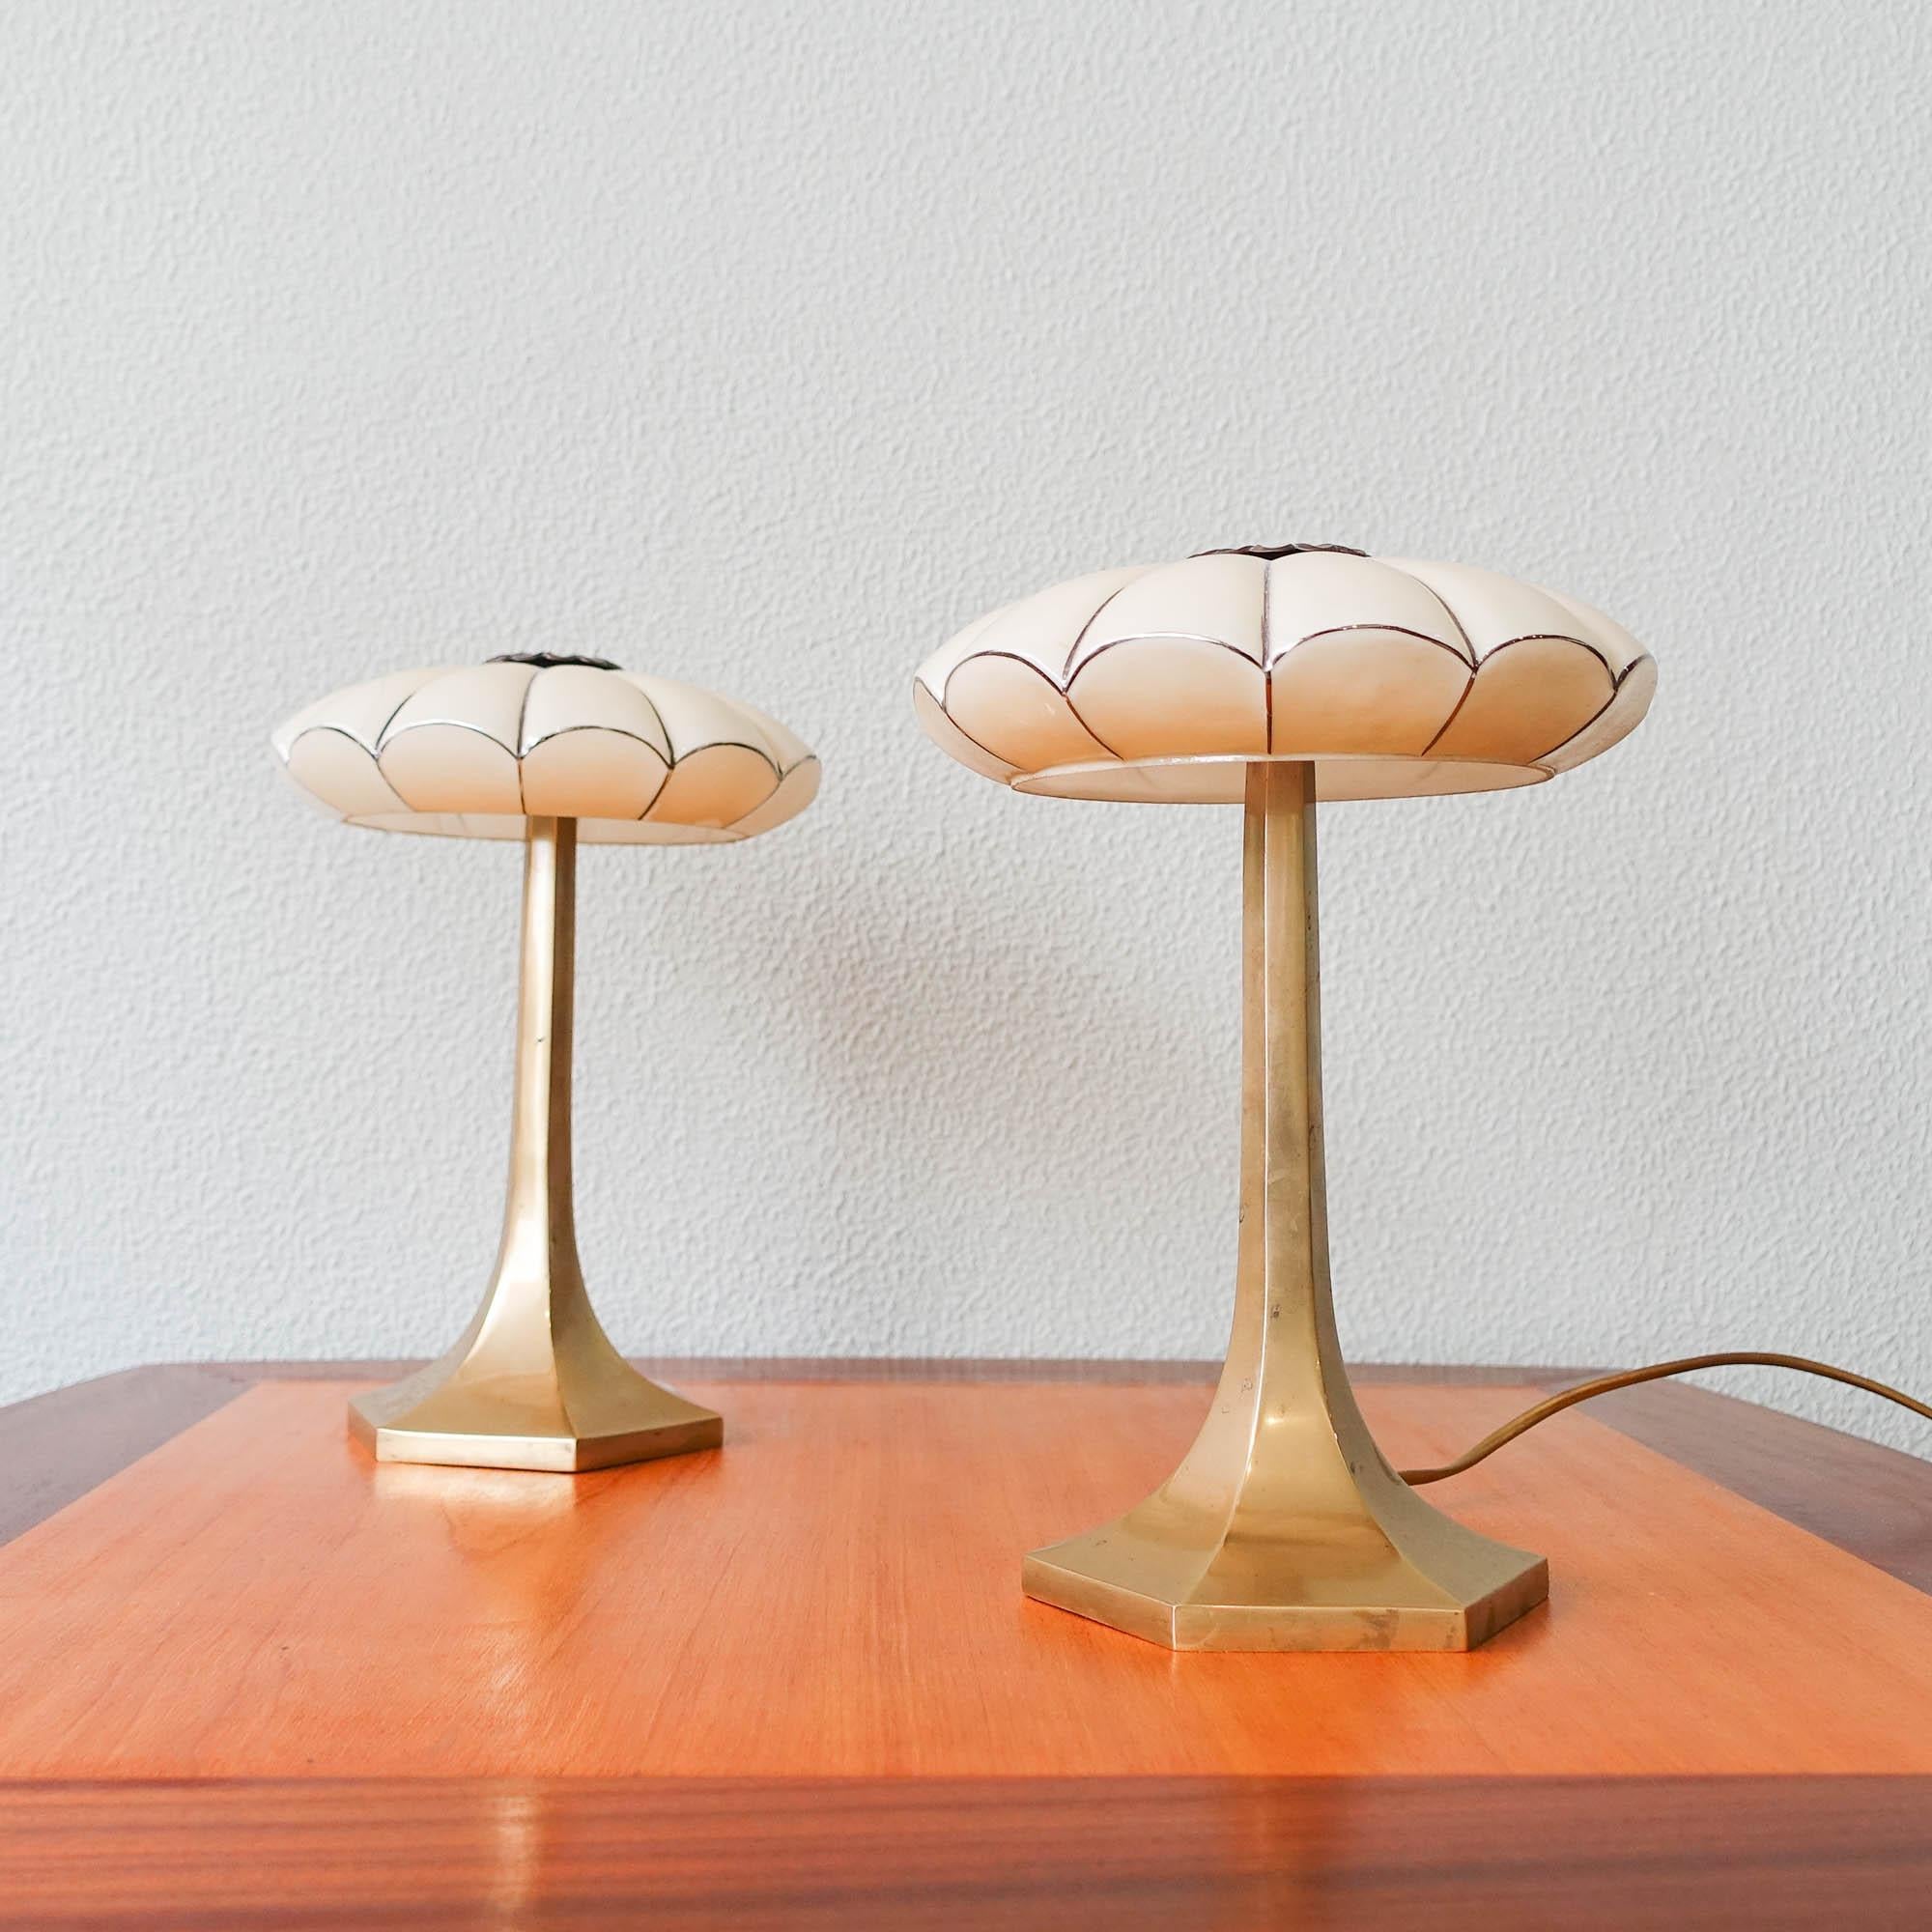 Brass Pair of Art Deco Table Lamps from Josef Hoffman for Wiener Werkstatte, 1930's